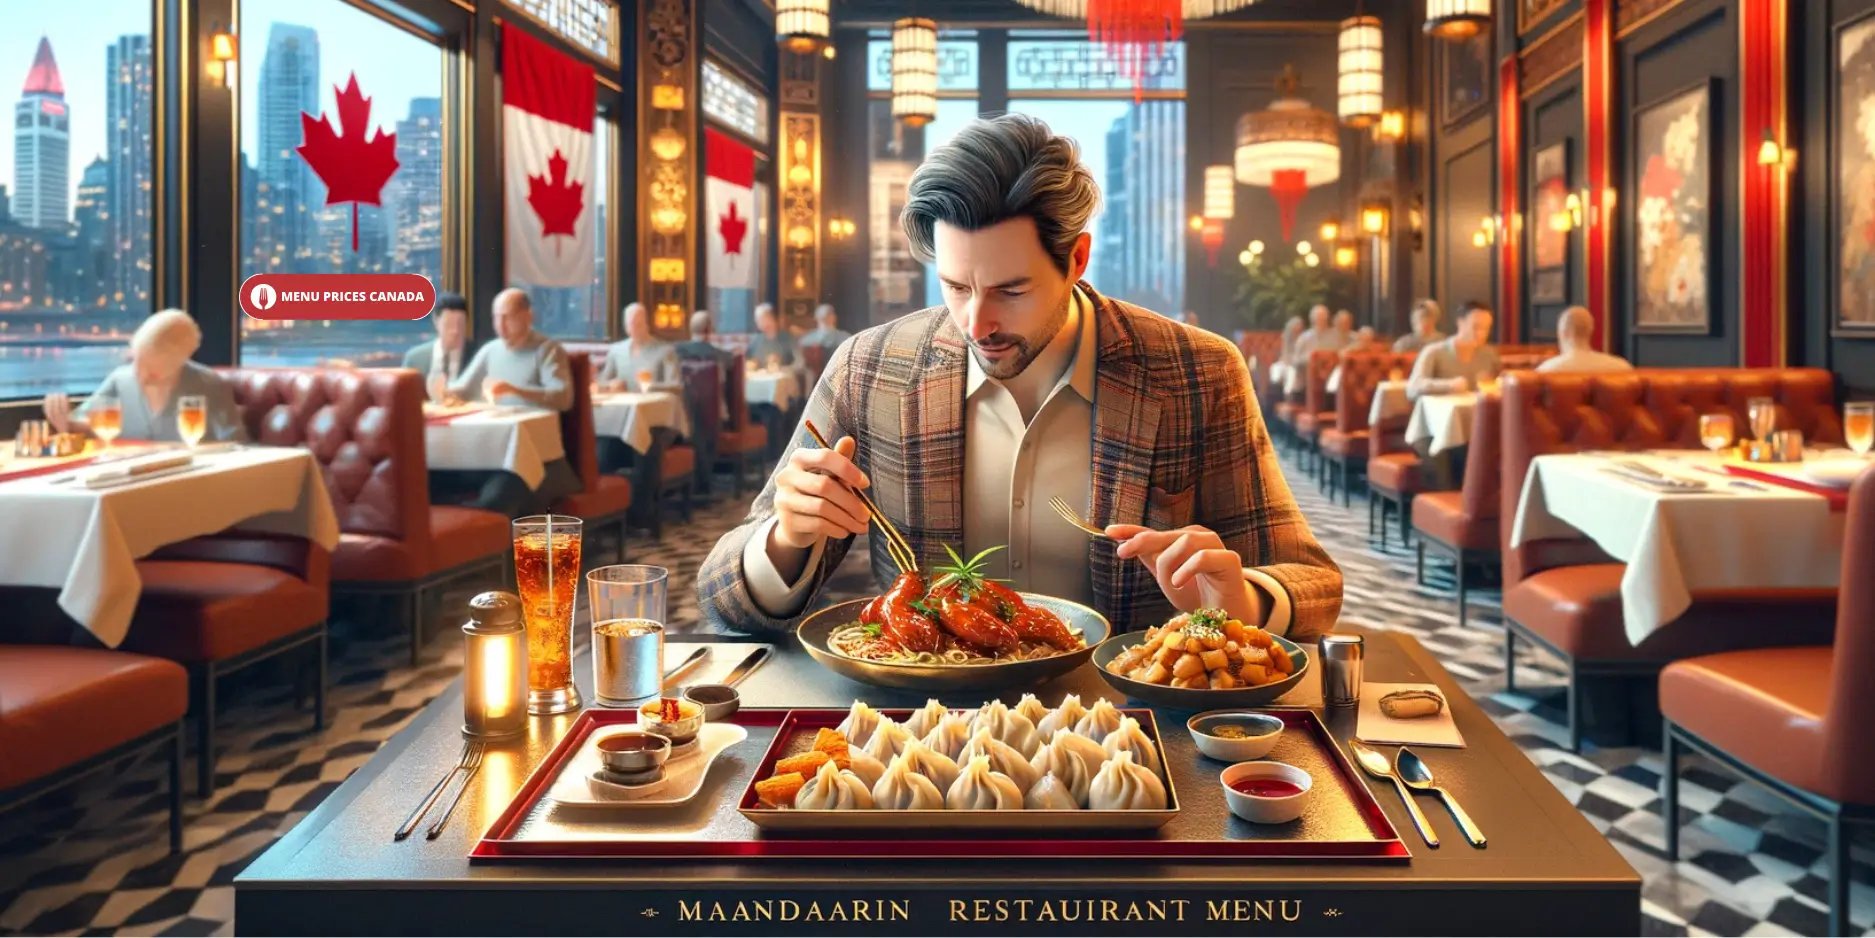 Mandarin Restaurant Menu Prices Canada.webp